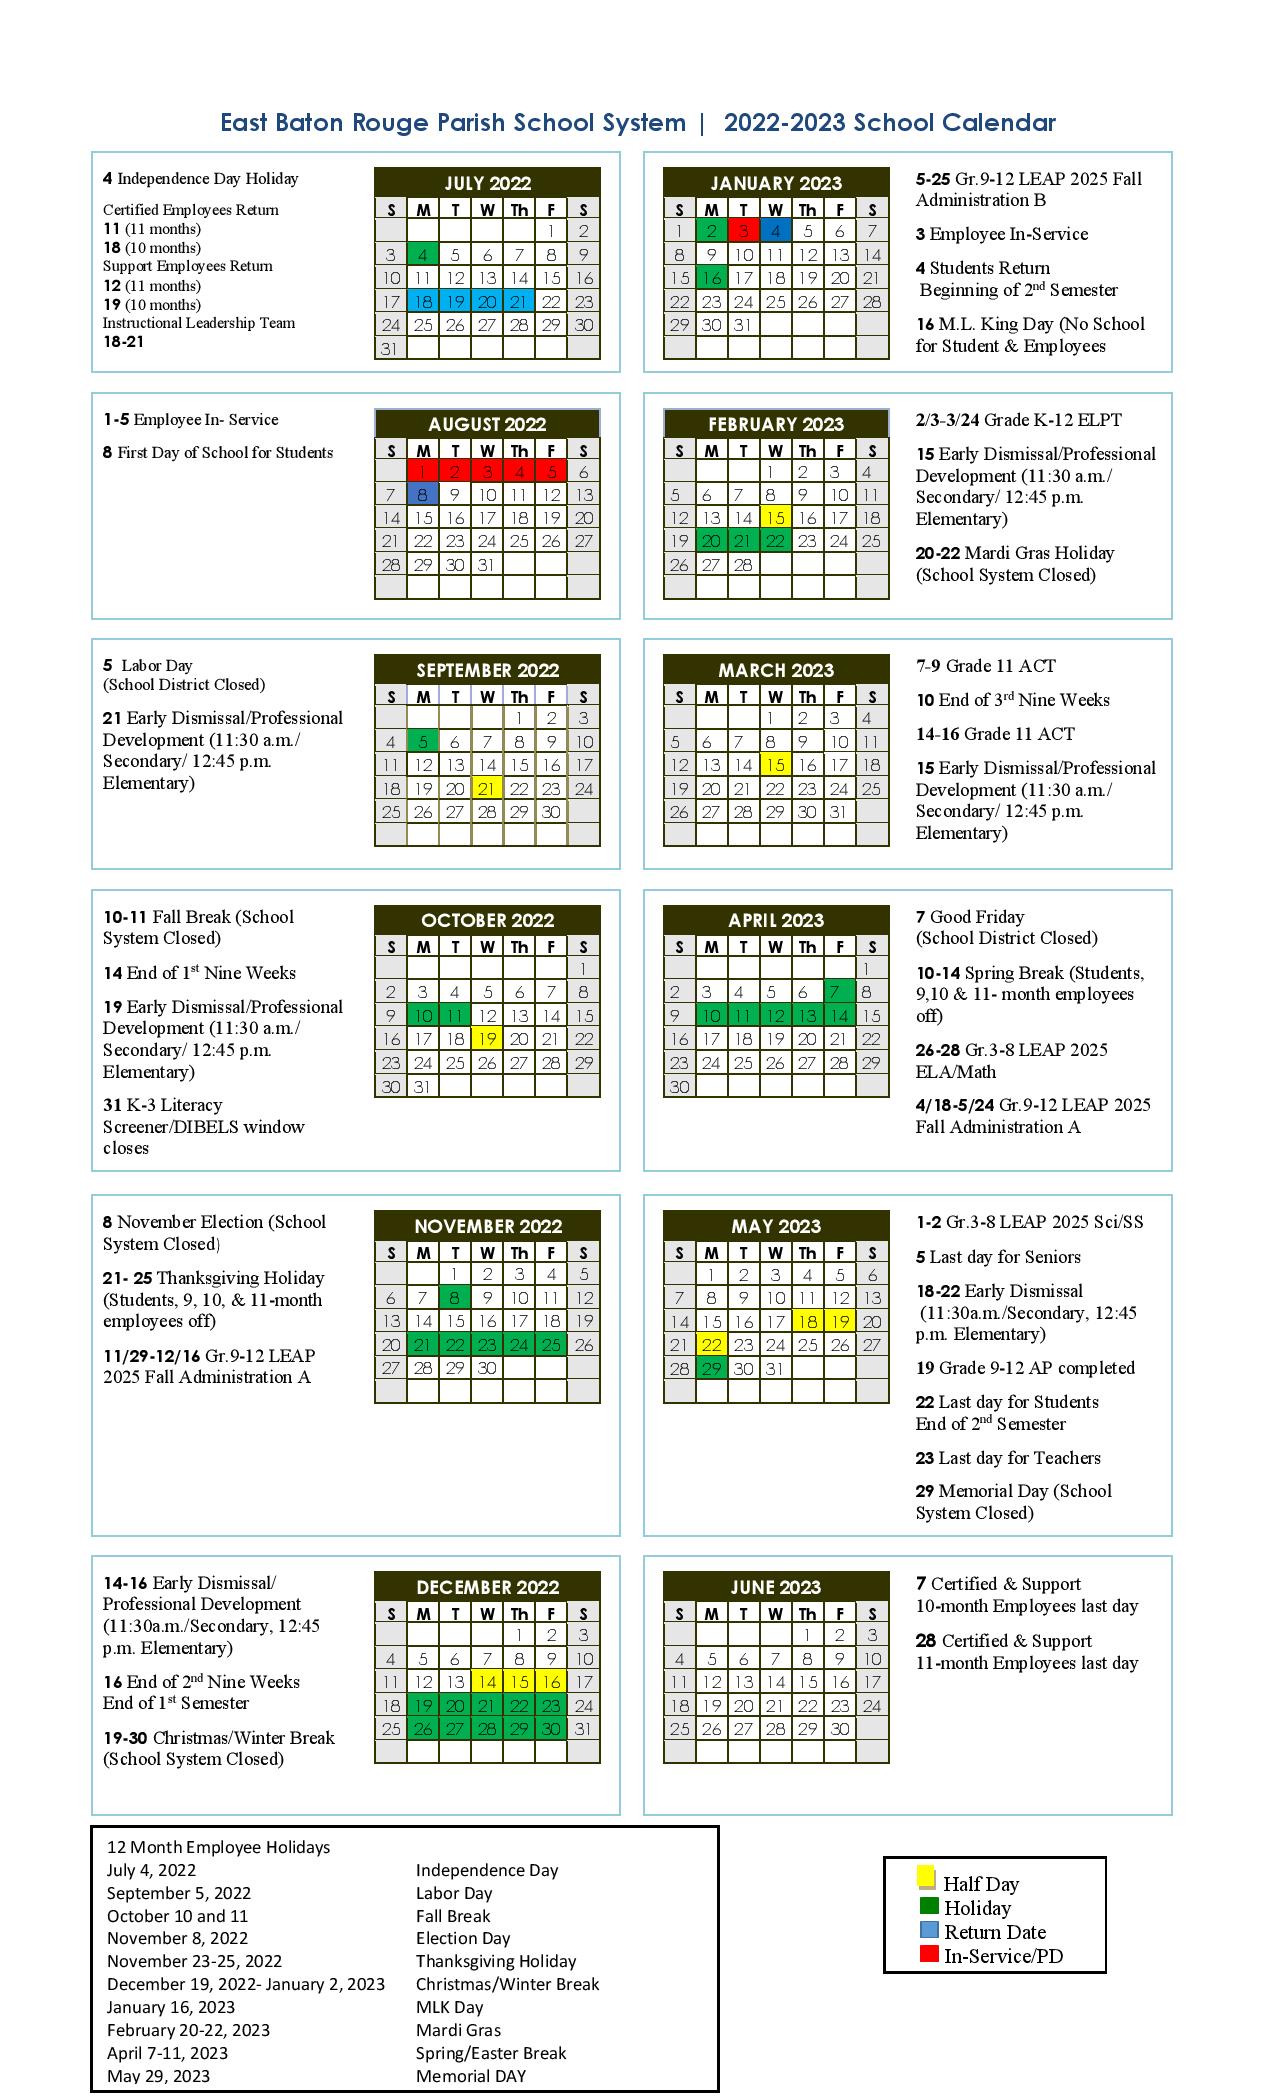 bossier-parish-schools-calendar-2024-and-2025-publicholidays